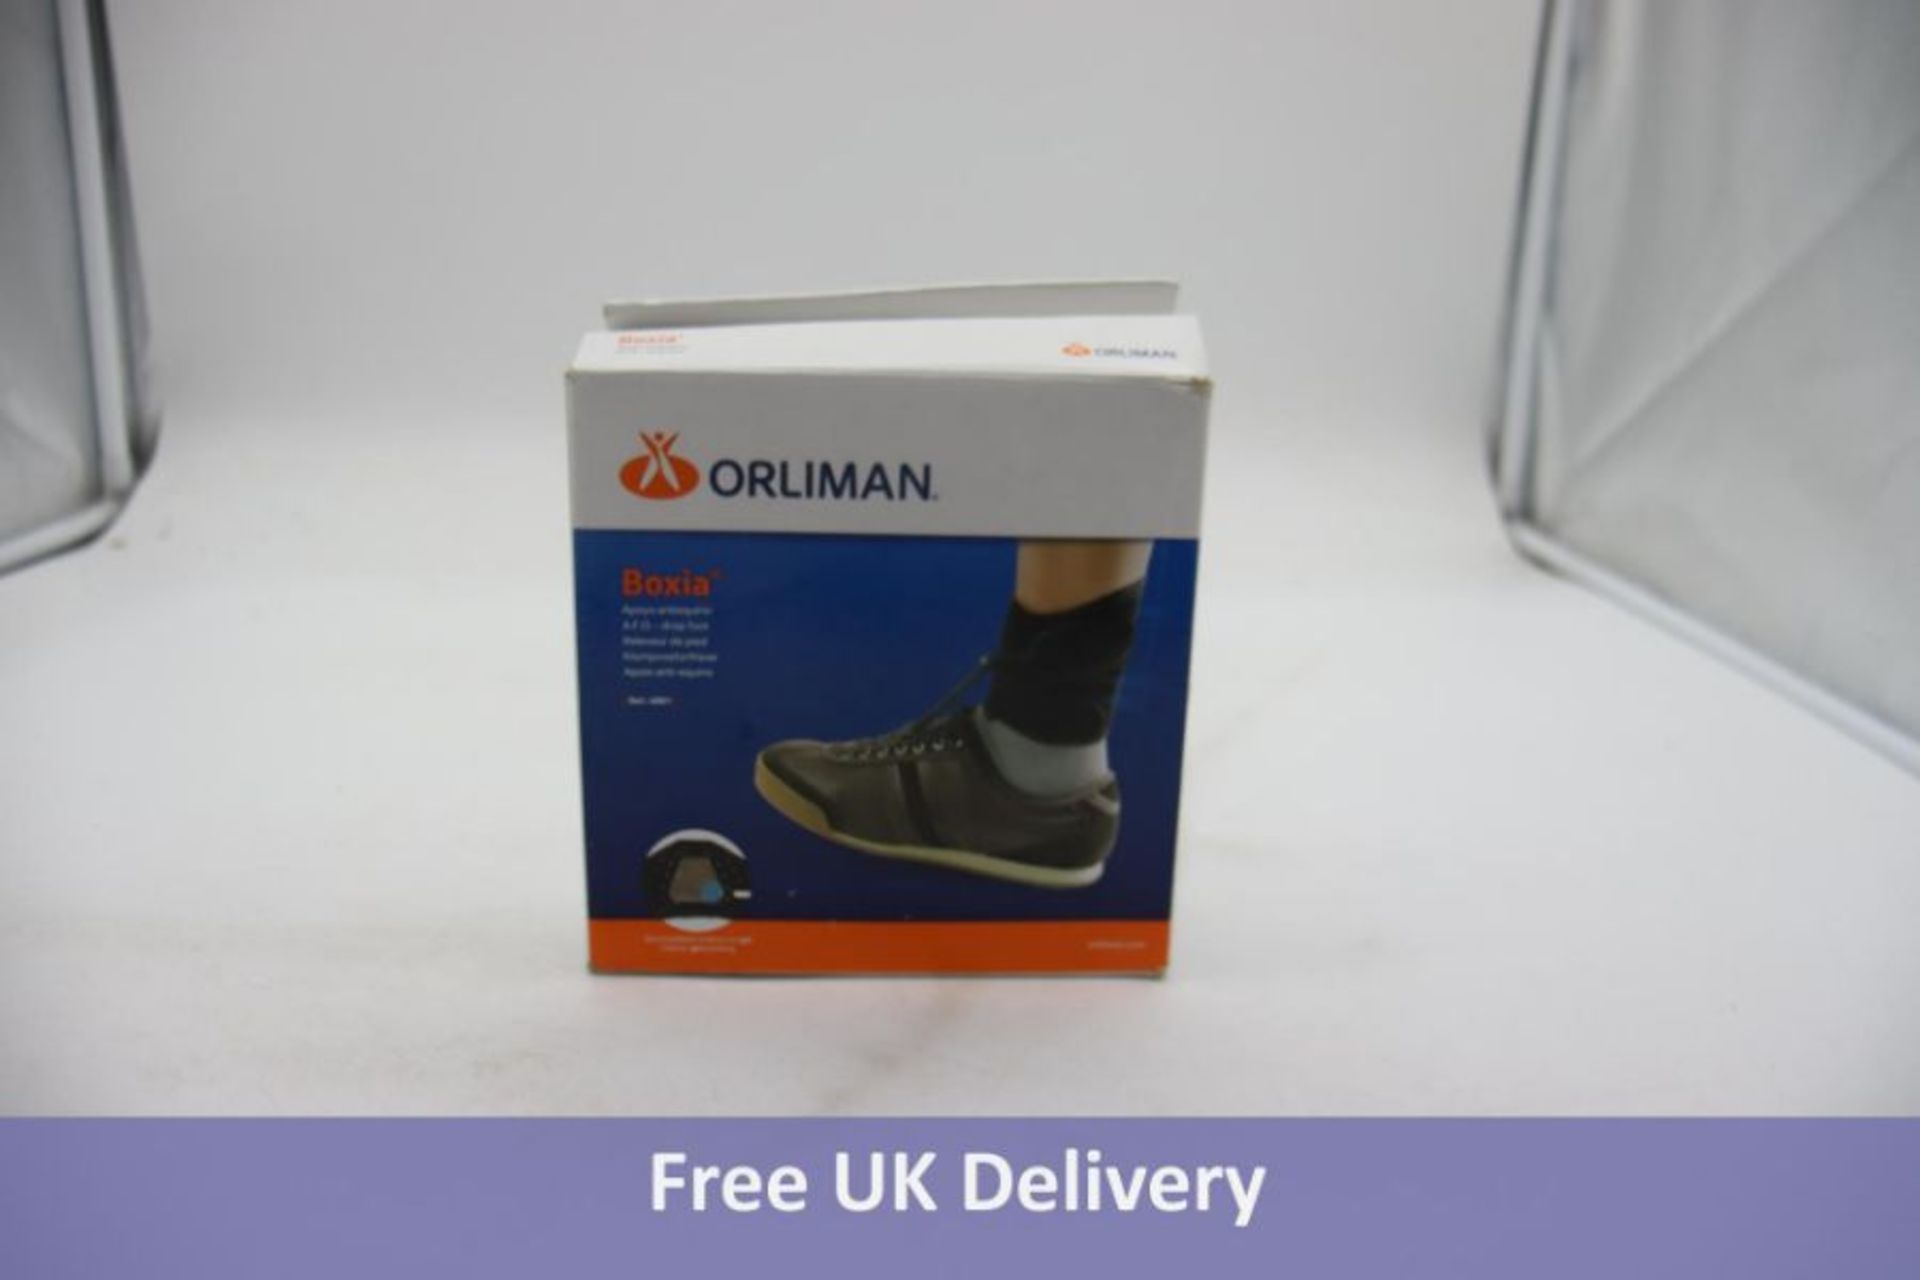 Orliman Boxia Drop Foot Ankle Brace, Size 2, Black. Box damaged